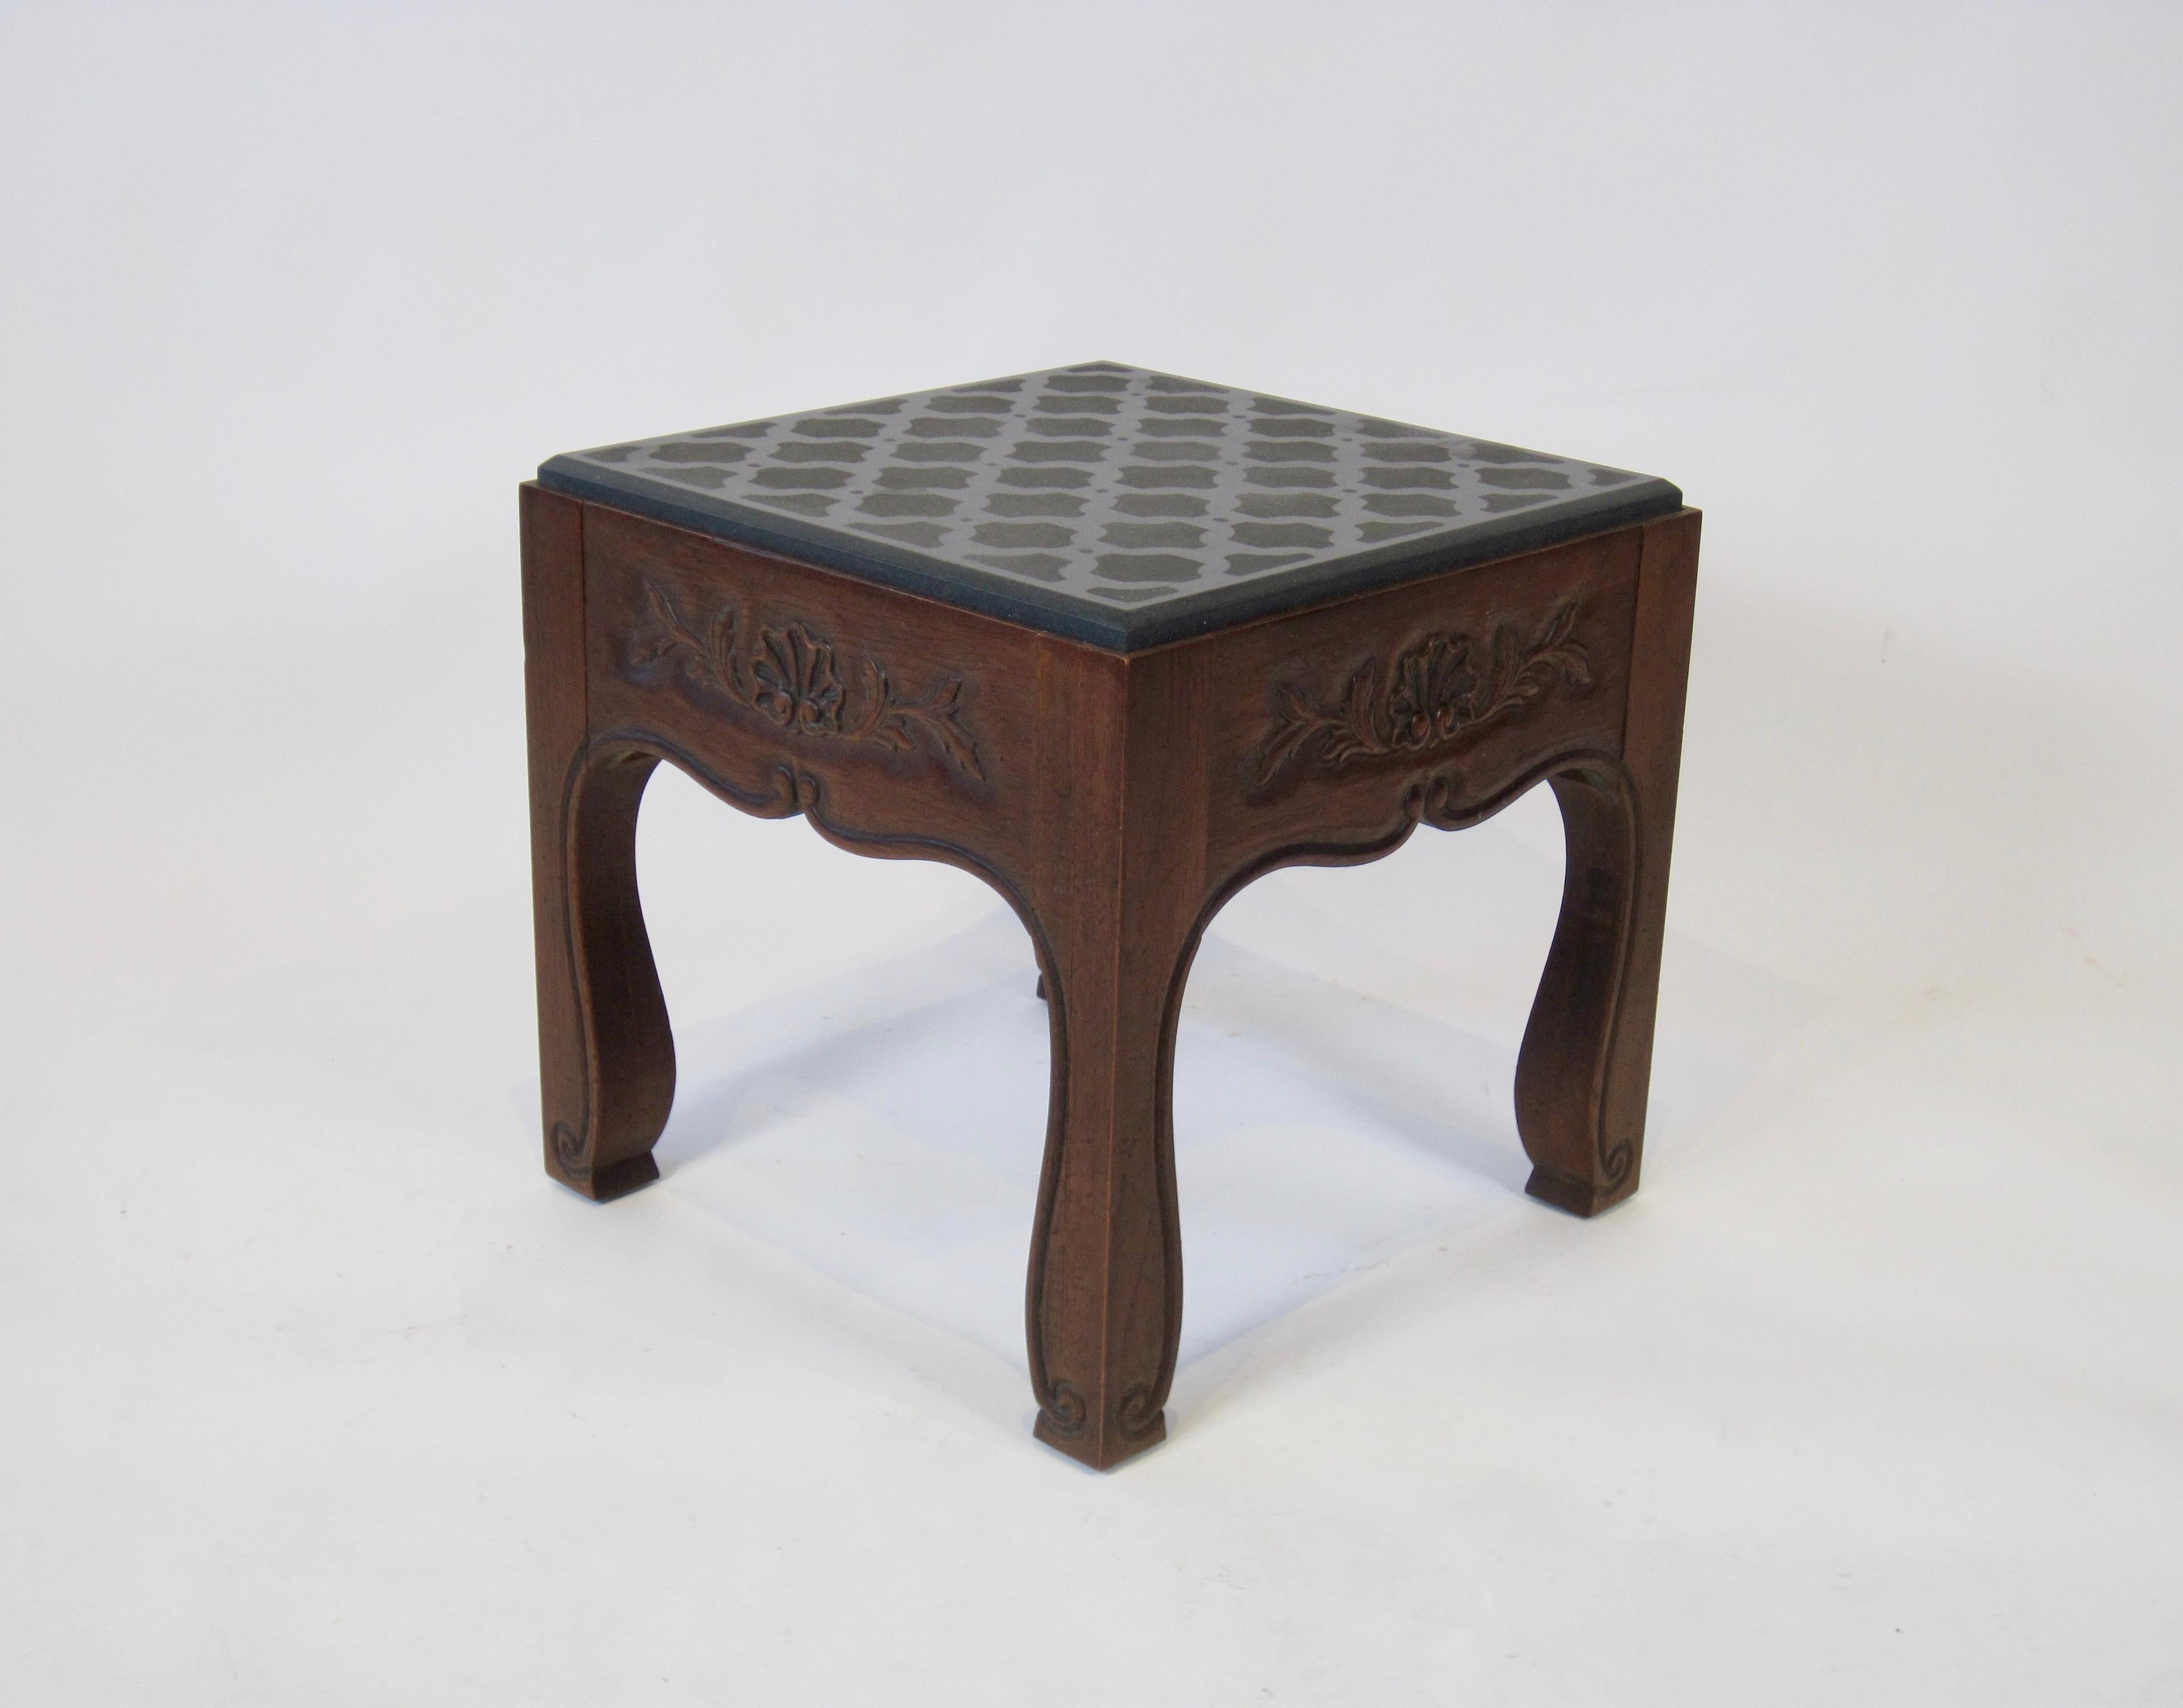 Art Nouveau Nouveau Inspired Drexel Side Table with Stone Top